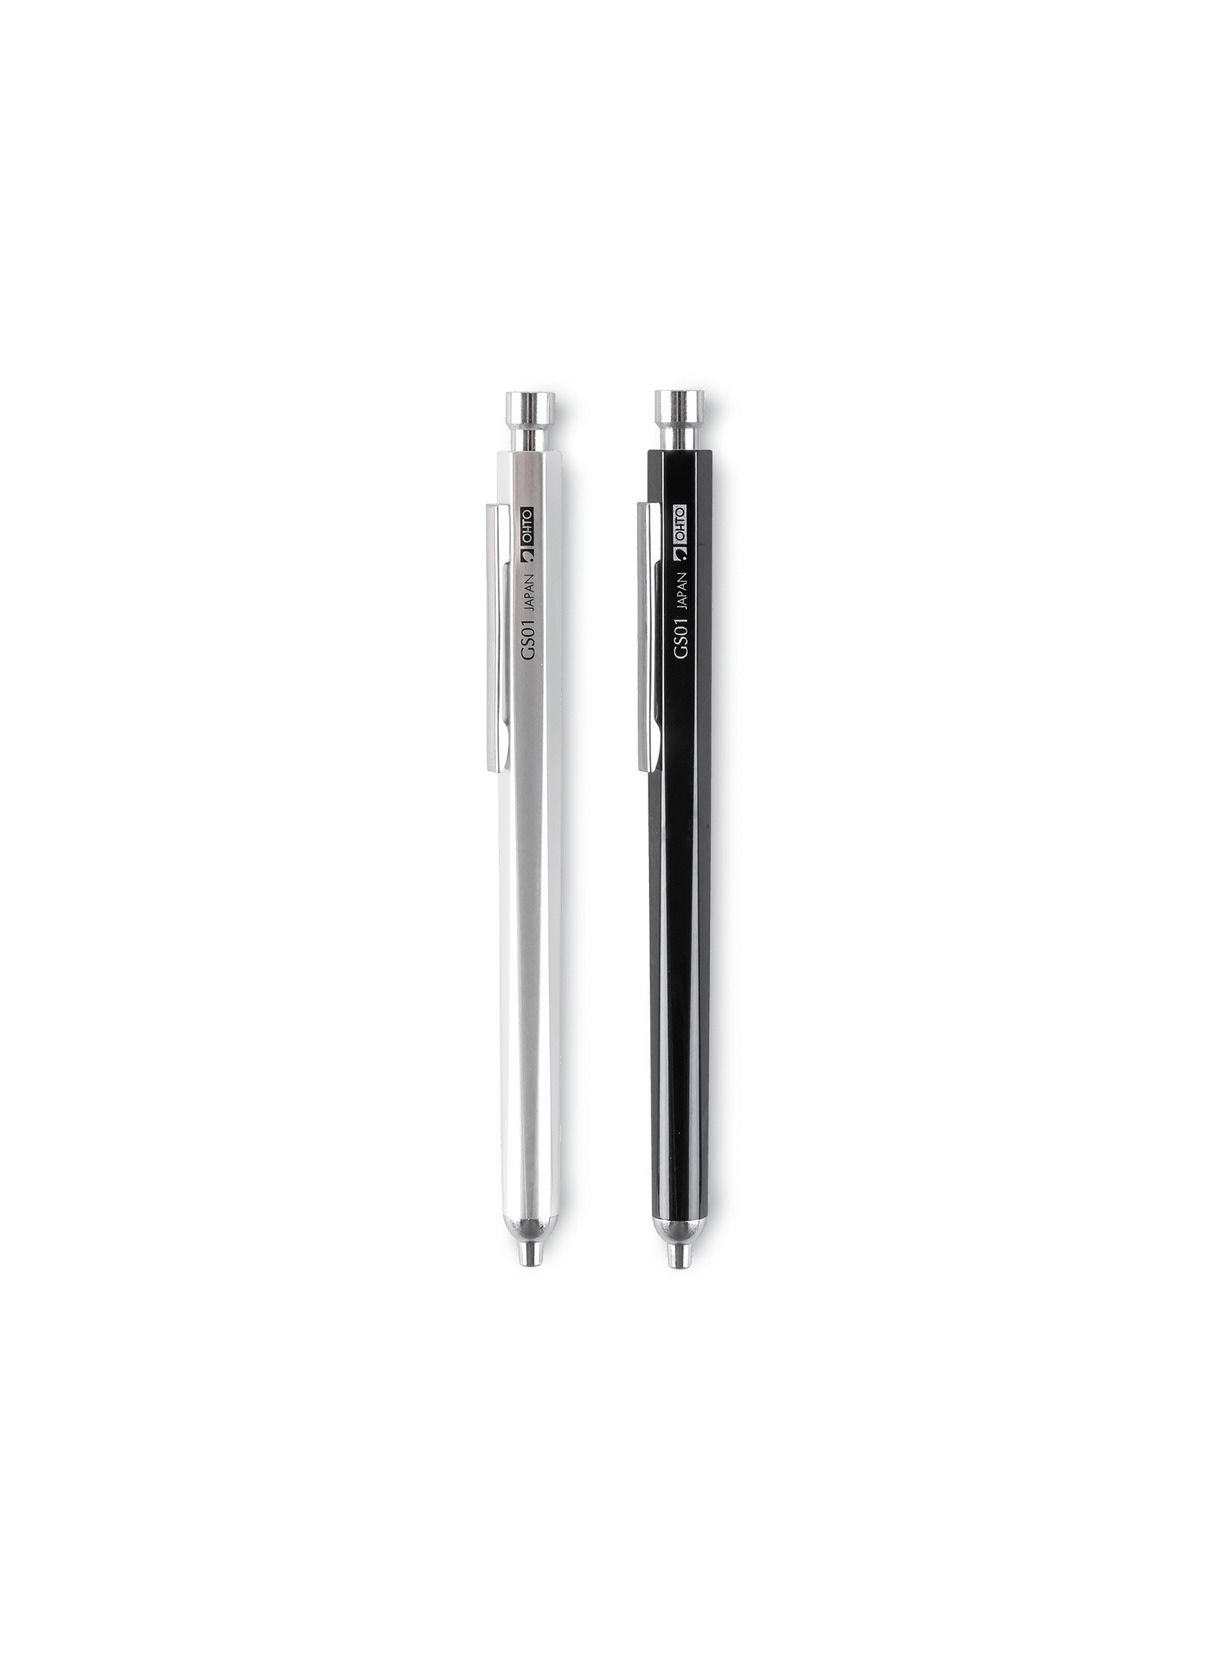 Horizon Ballpoint Pen in Silver and Black